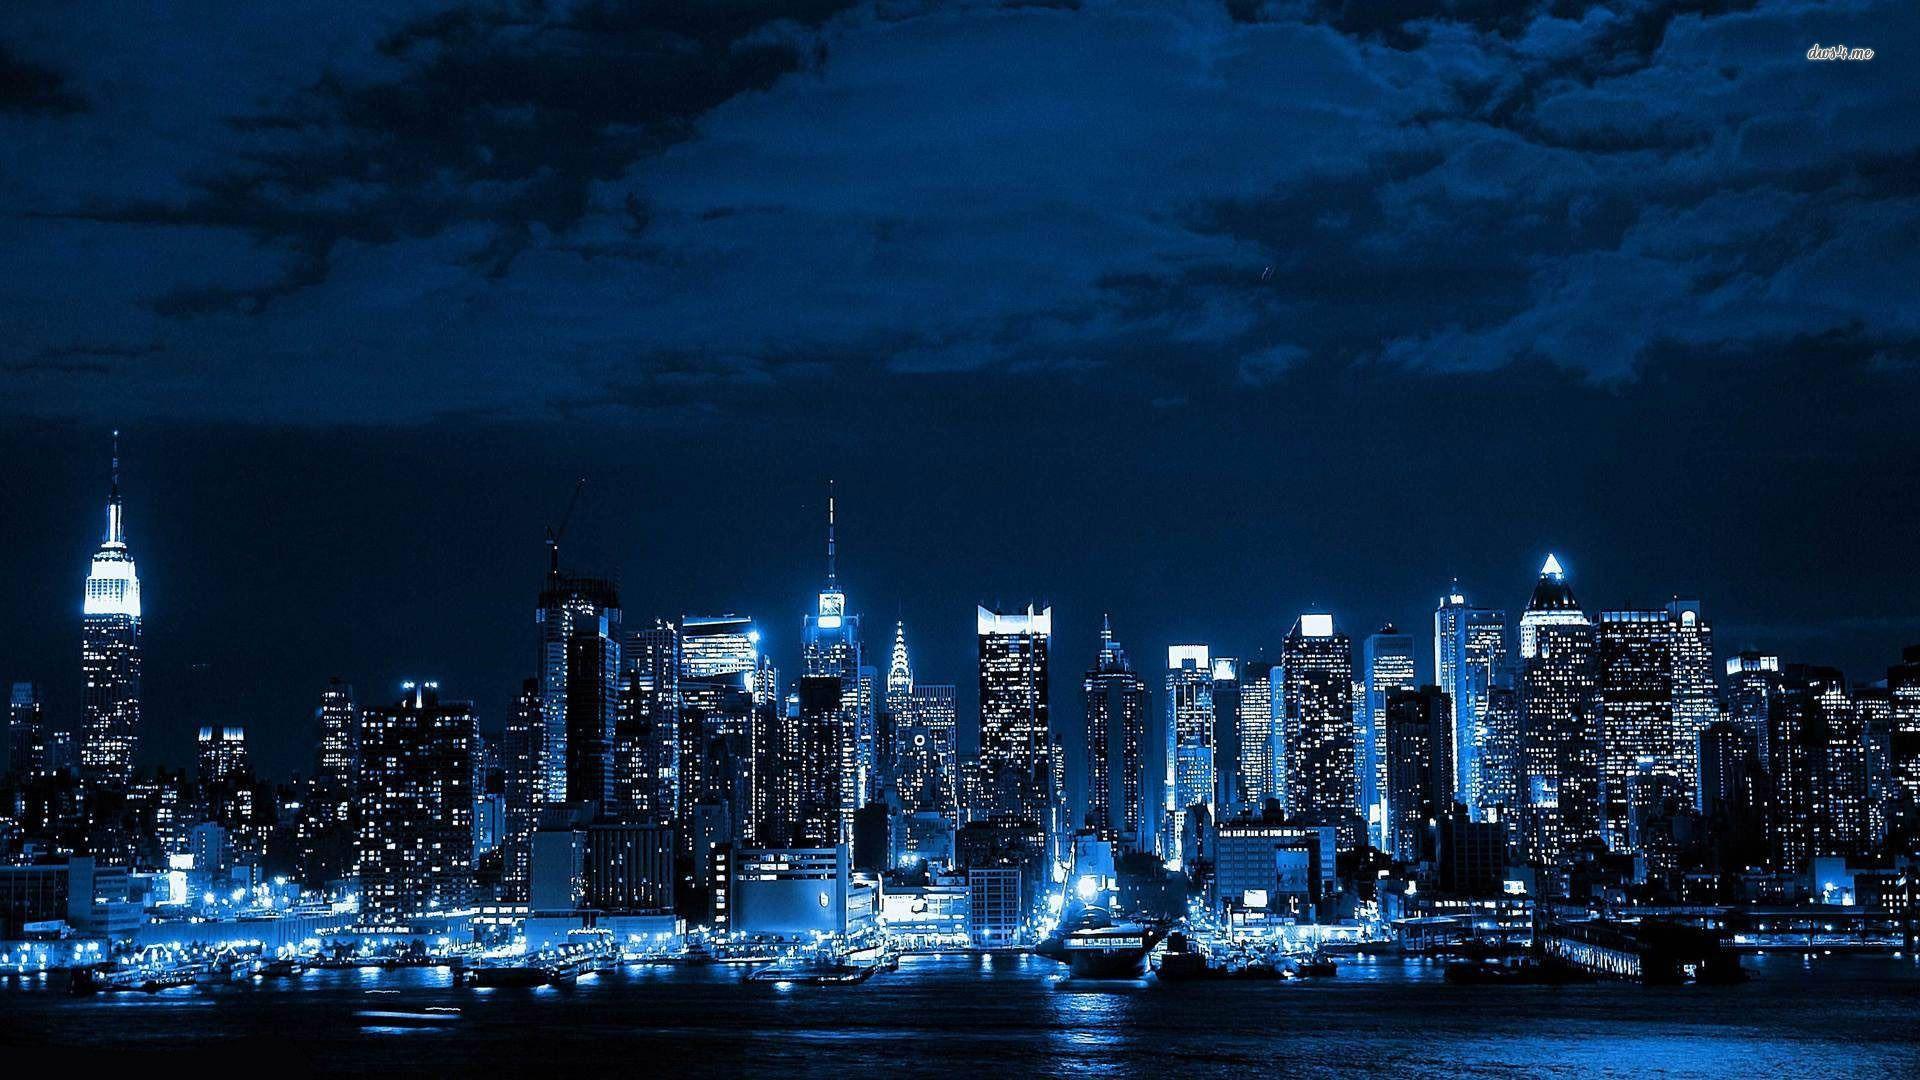 New York City At Night HD Image Wallpaper. Gotham city